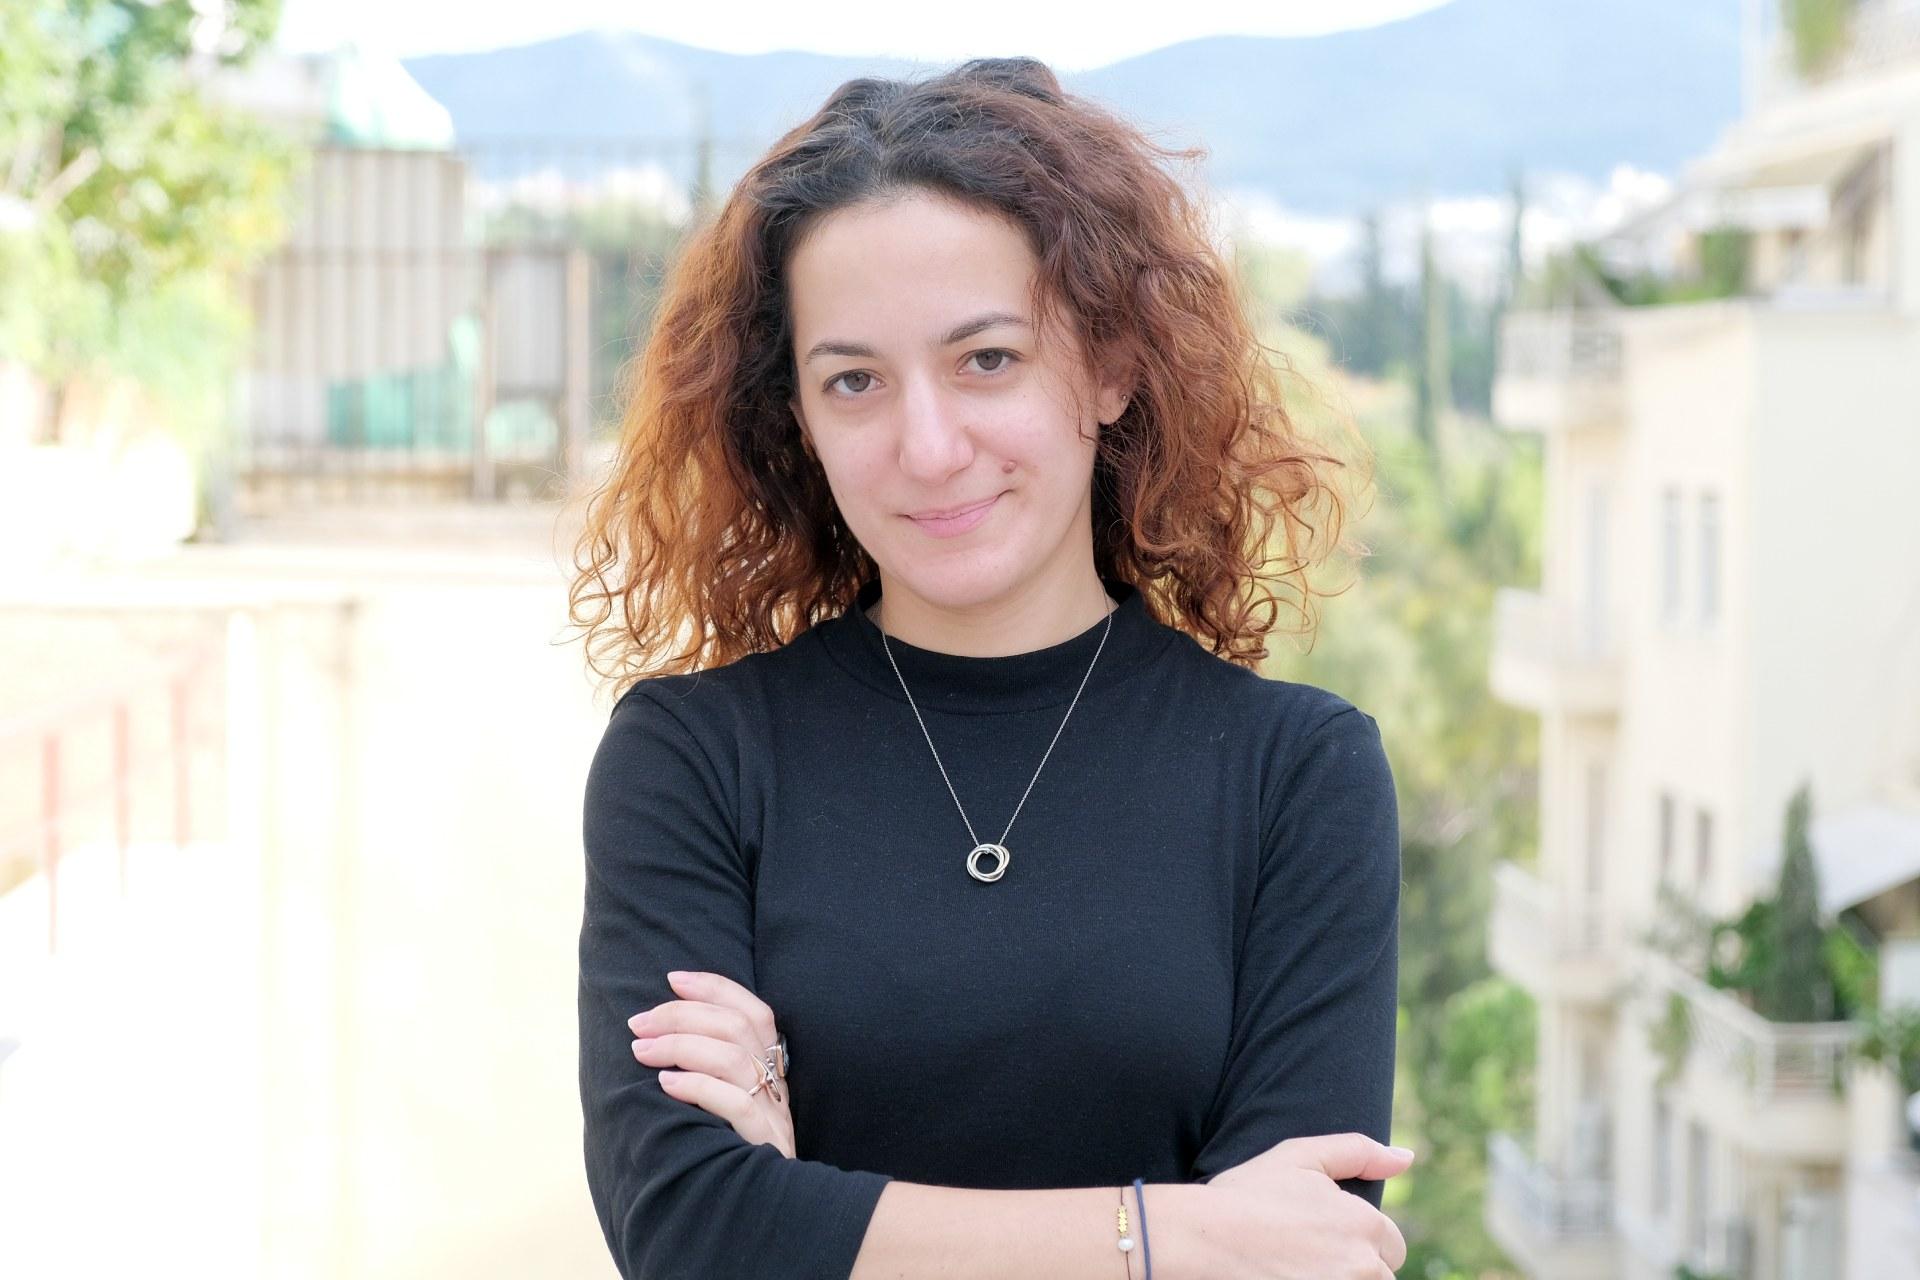 Dr Maria Ioannidou